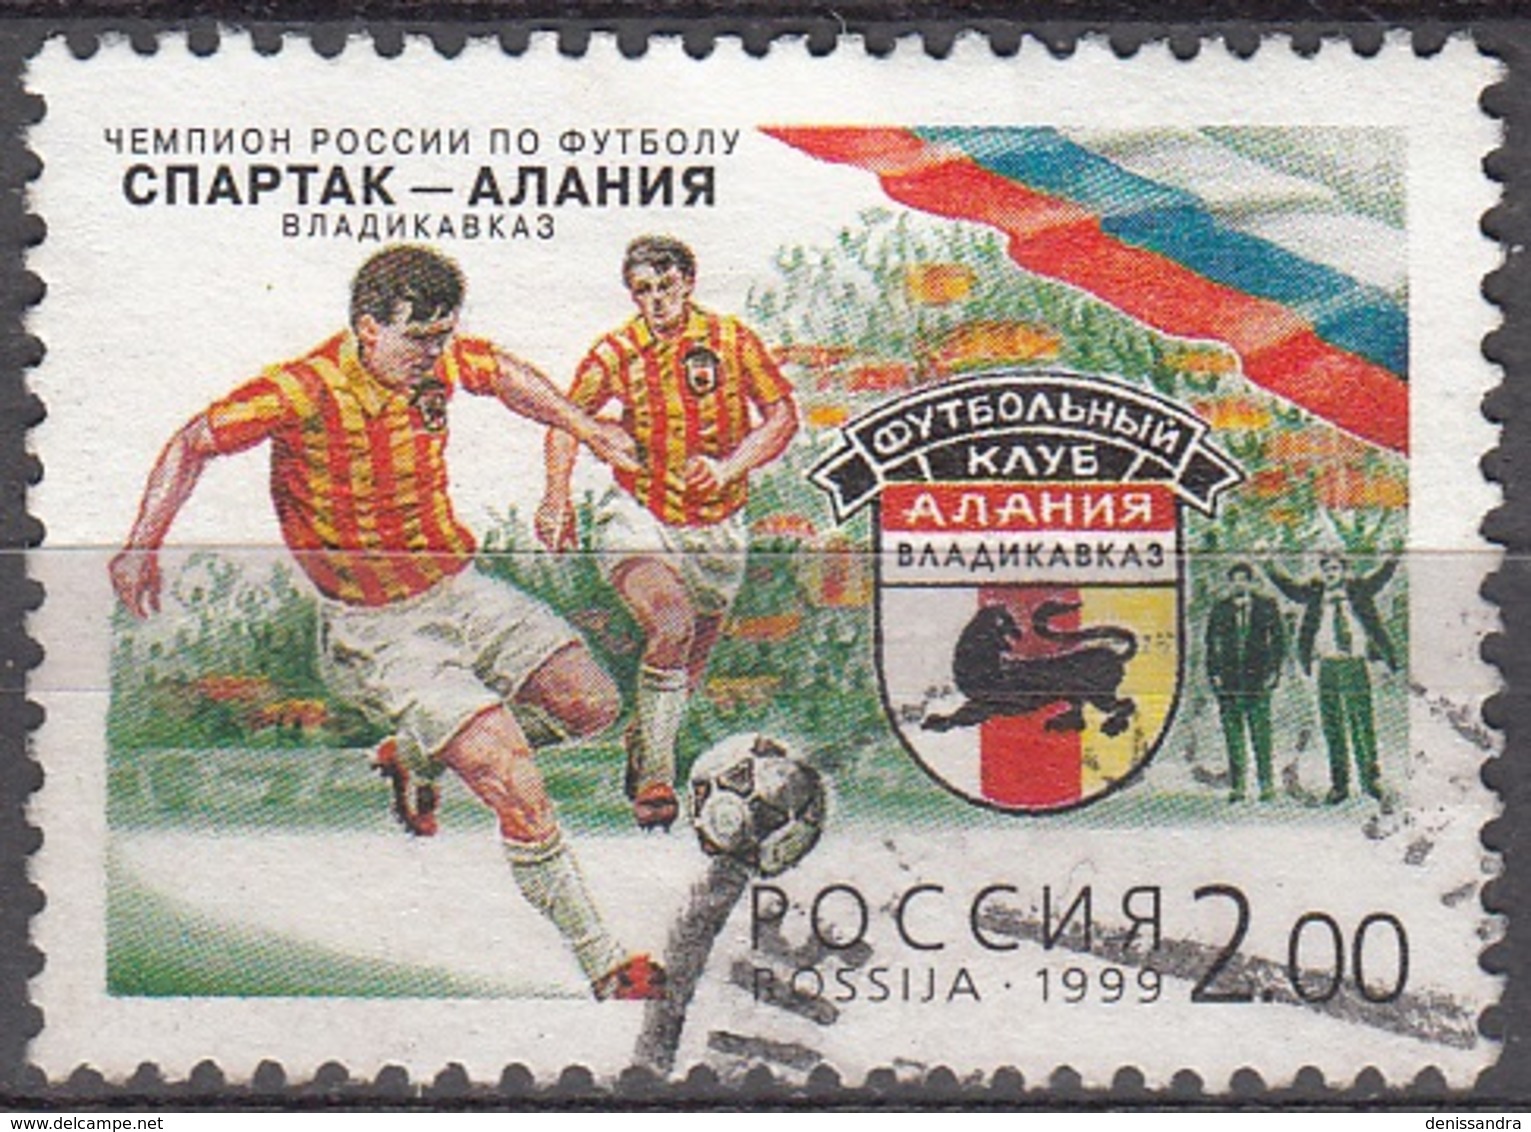 Rossija 1999 Michel 775 O Cote (2008) 0.20 Euro 1995 Spartak-Alania Vladikavkaz Remporte Le Championnat Cachet Rond - Used Stamps